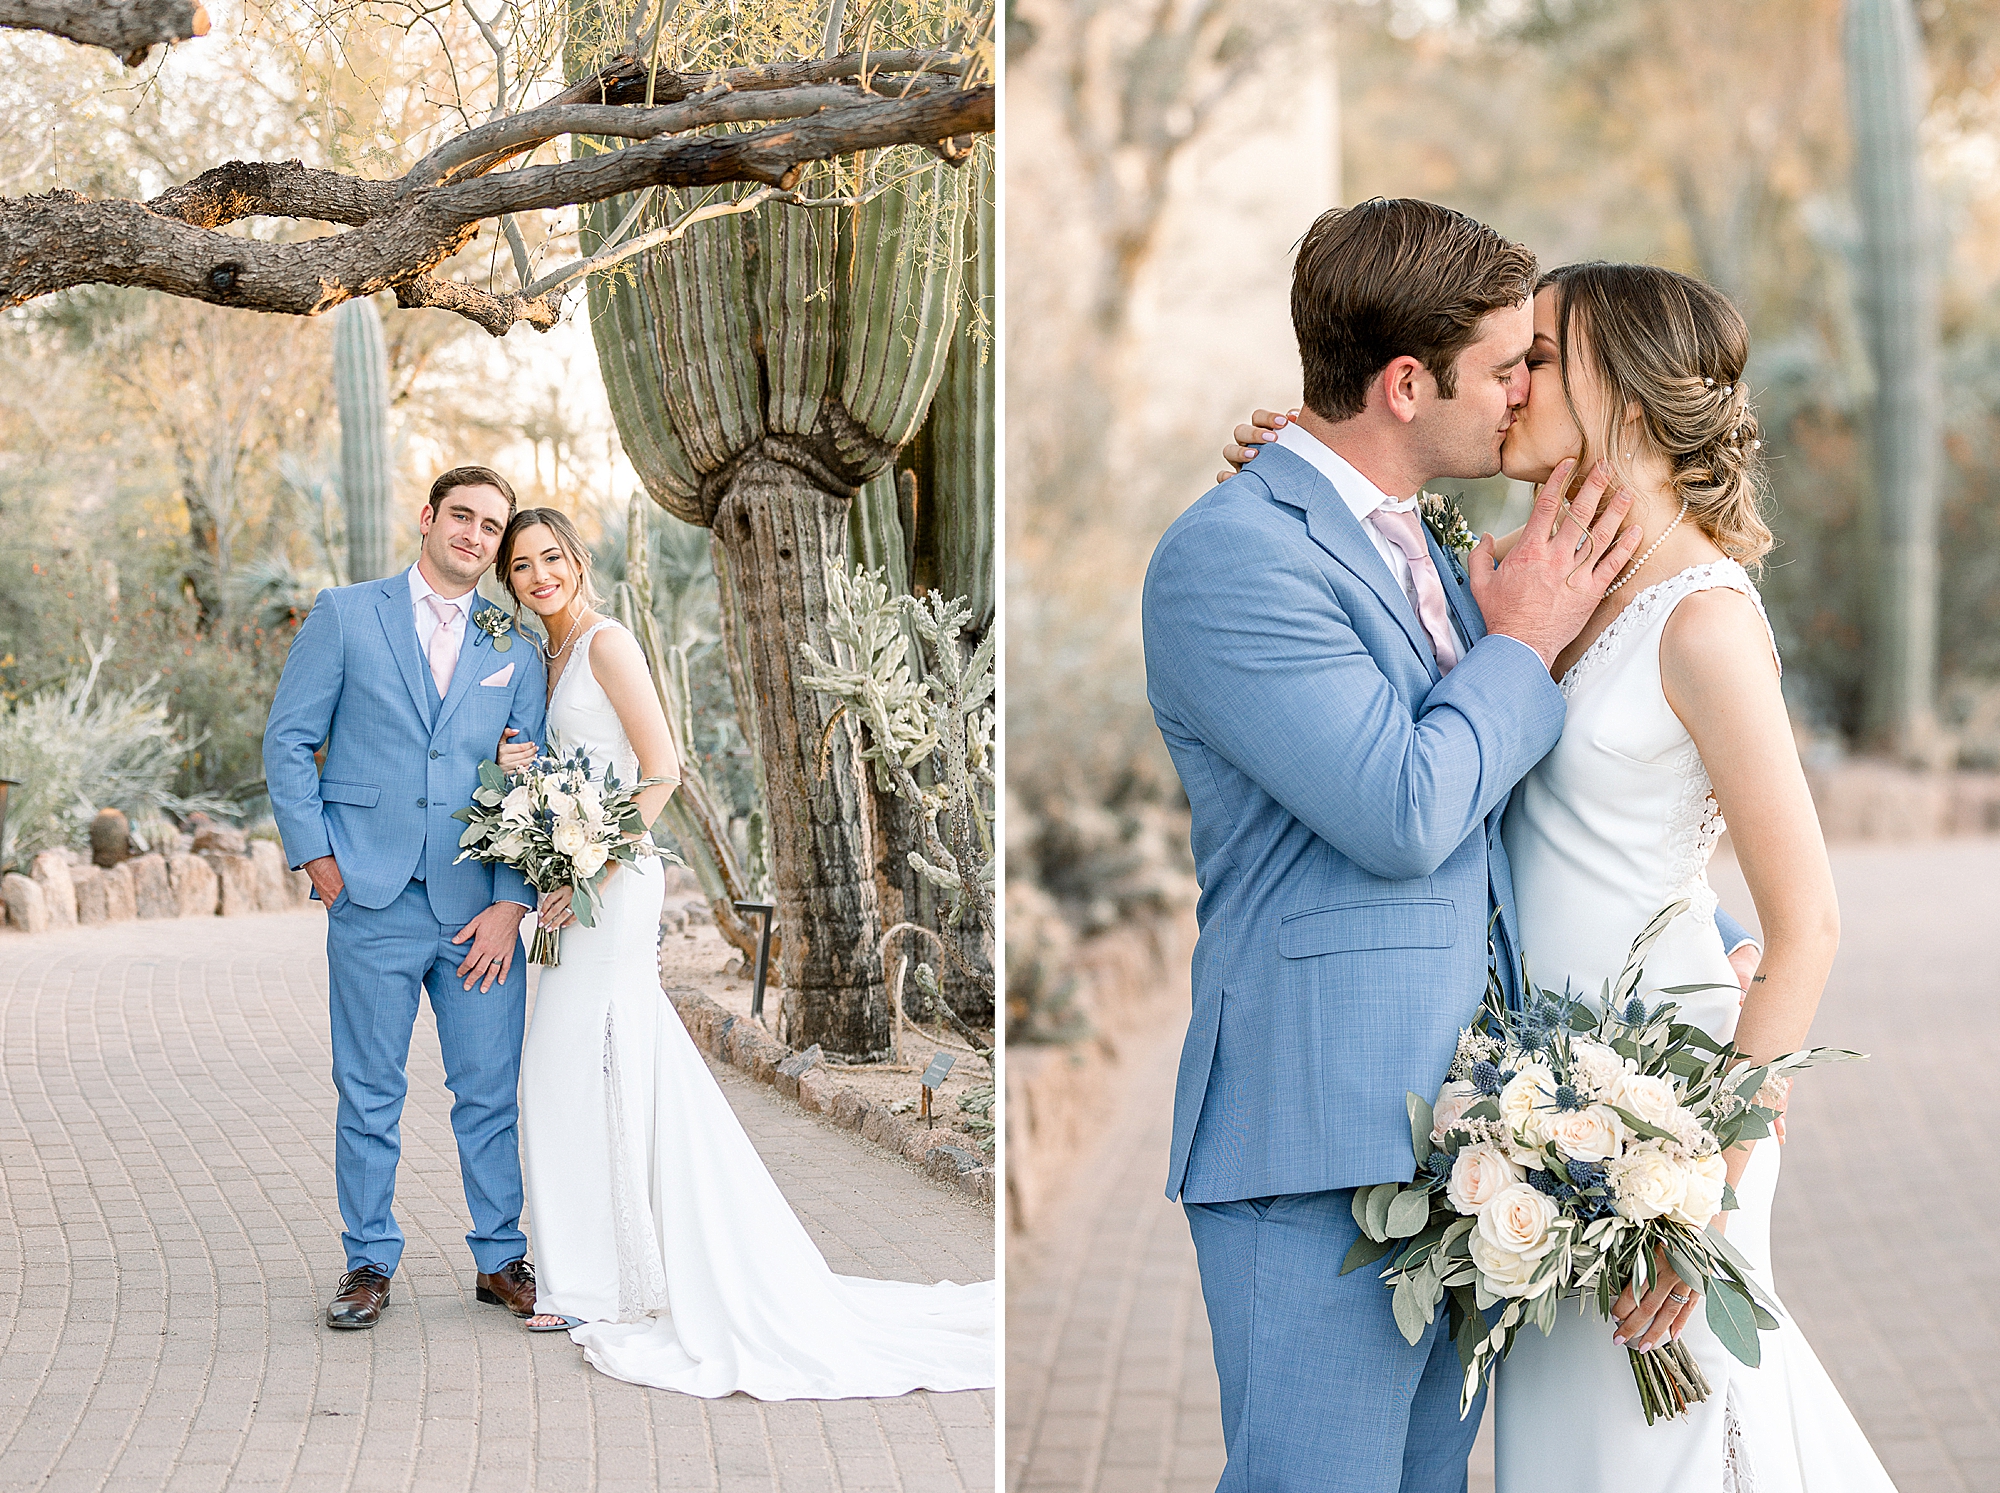 Bride and Groom at their wedding at Desert Botanical Garden